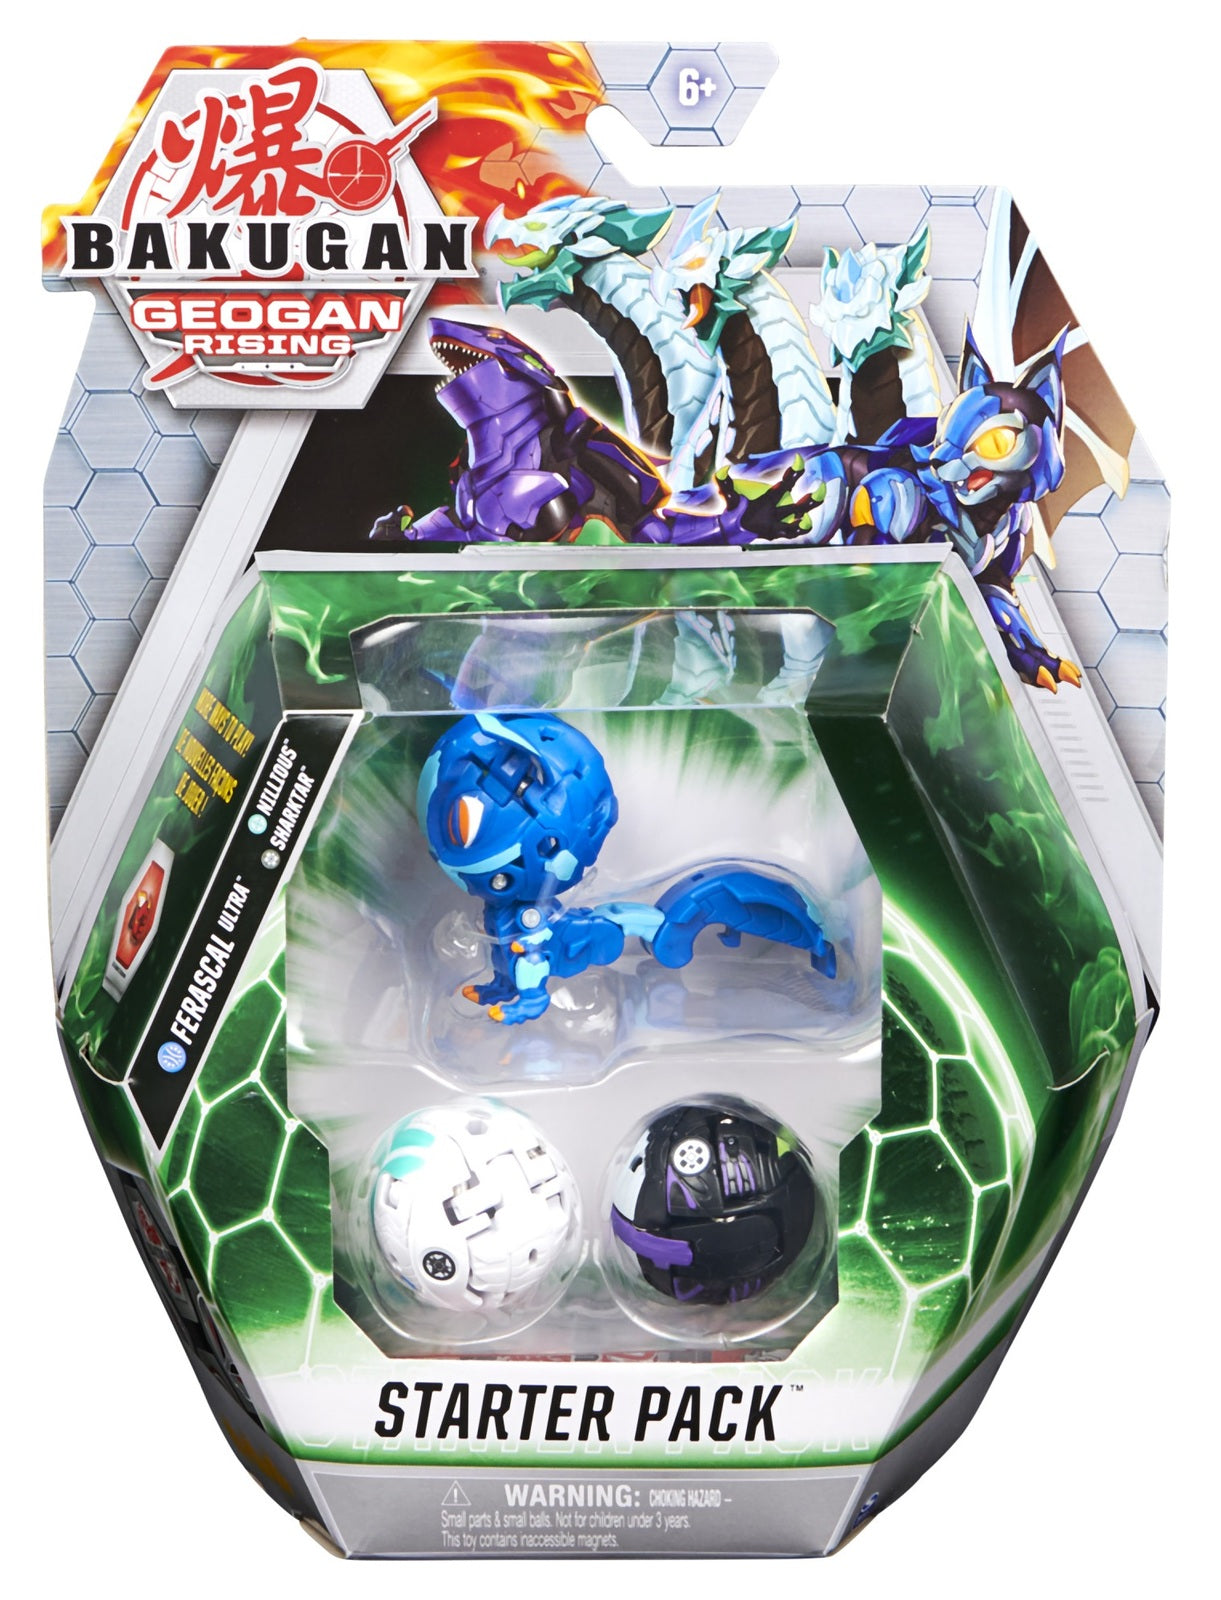 Bakugan Starter 3 Pack Saison 3.0